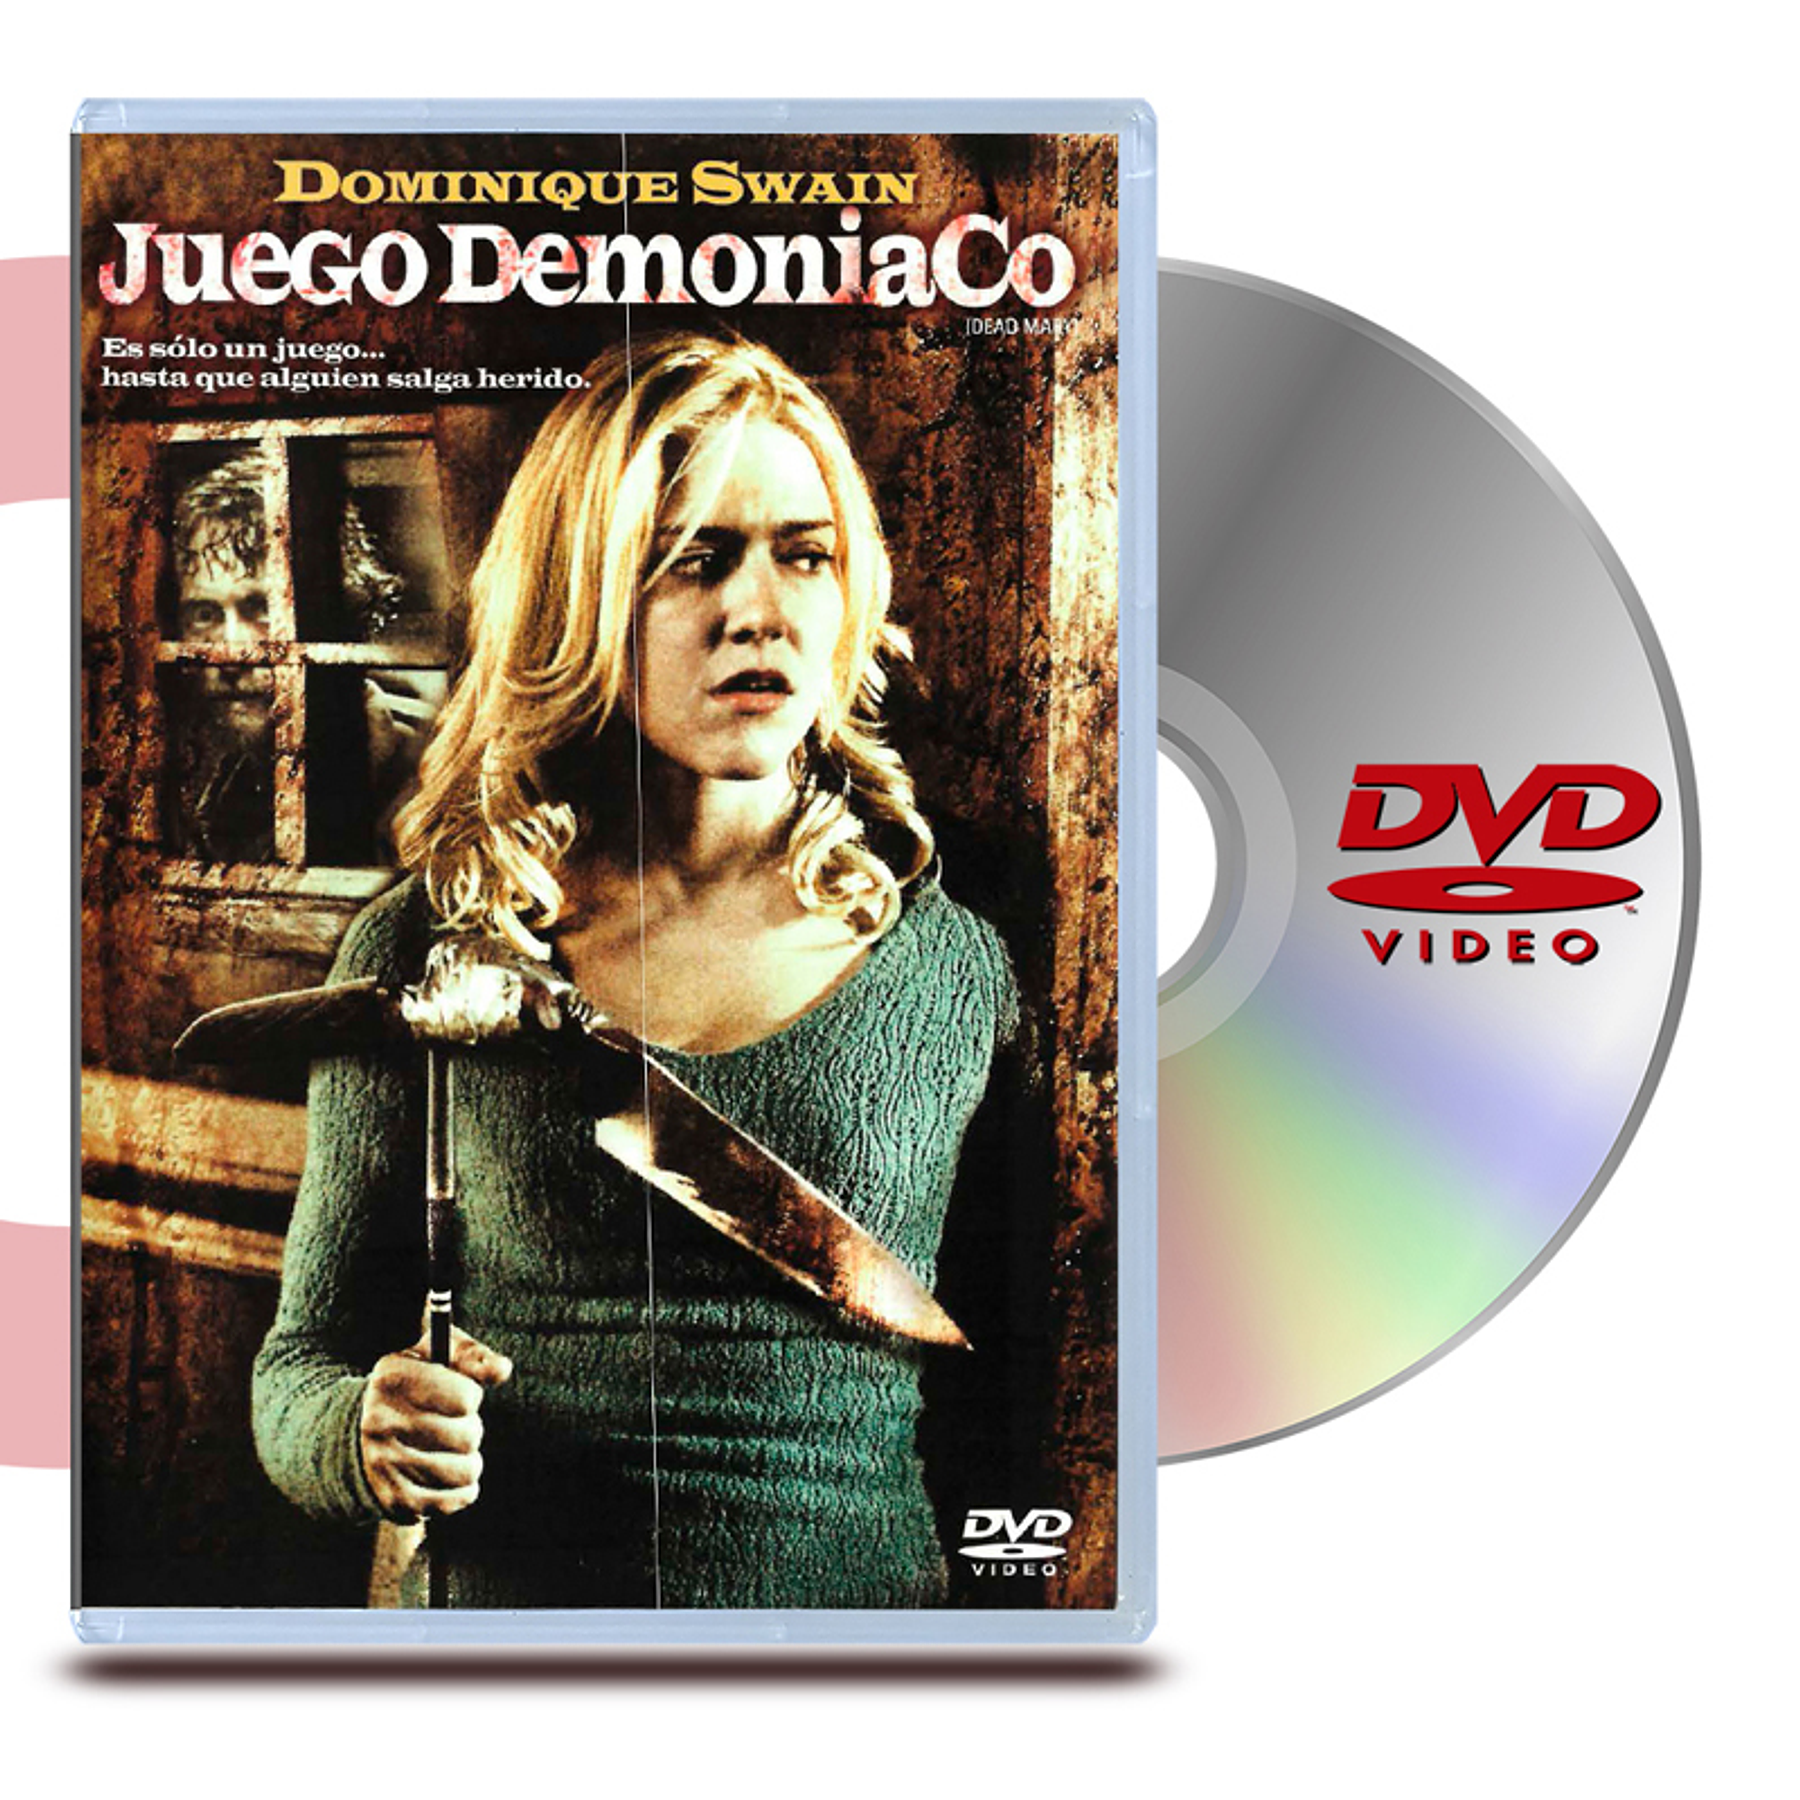 DVD JUEGO DEMONIACO